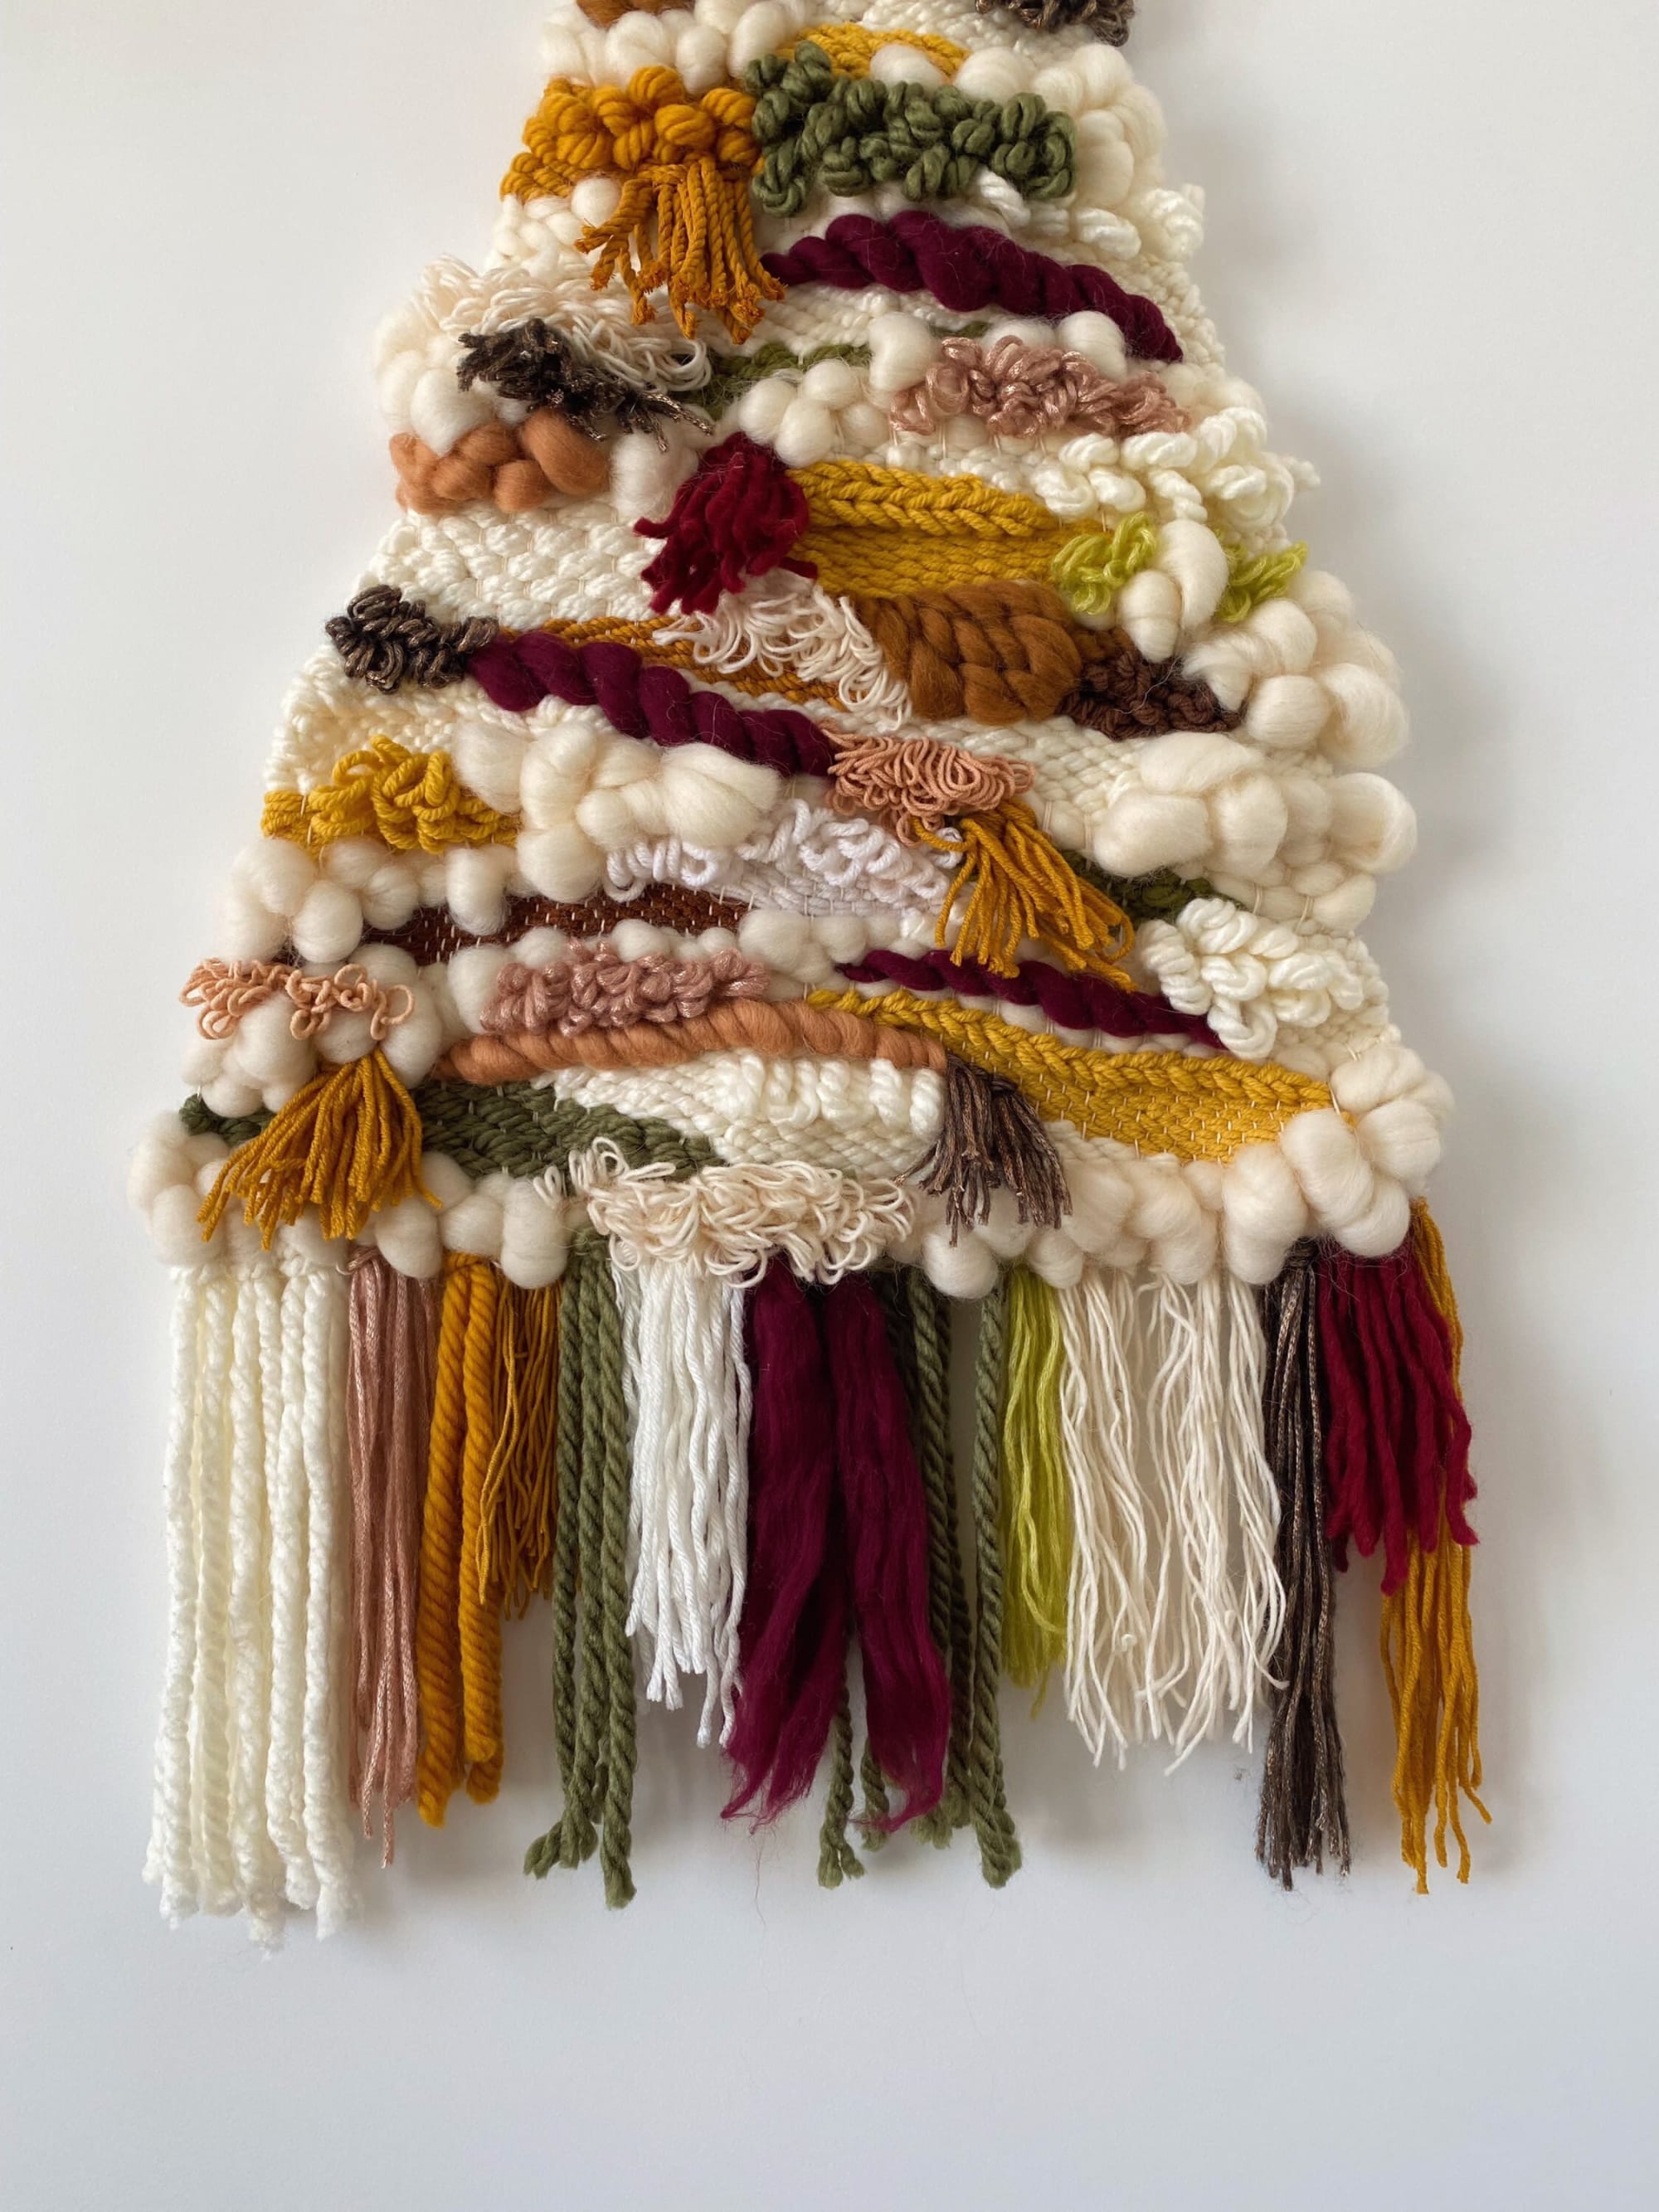 Tapestry Tree Holiday Ornament Kit – Mirrix Looms